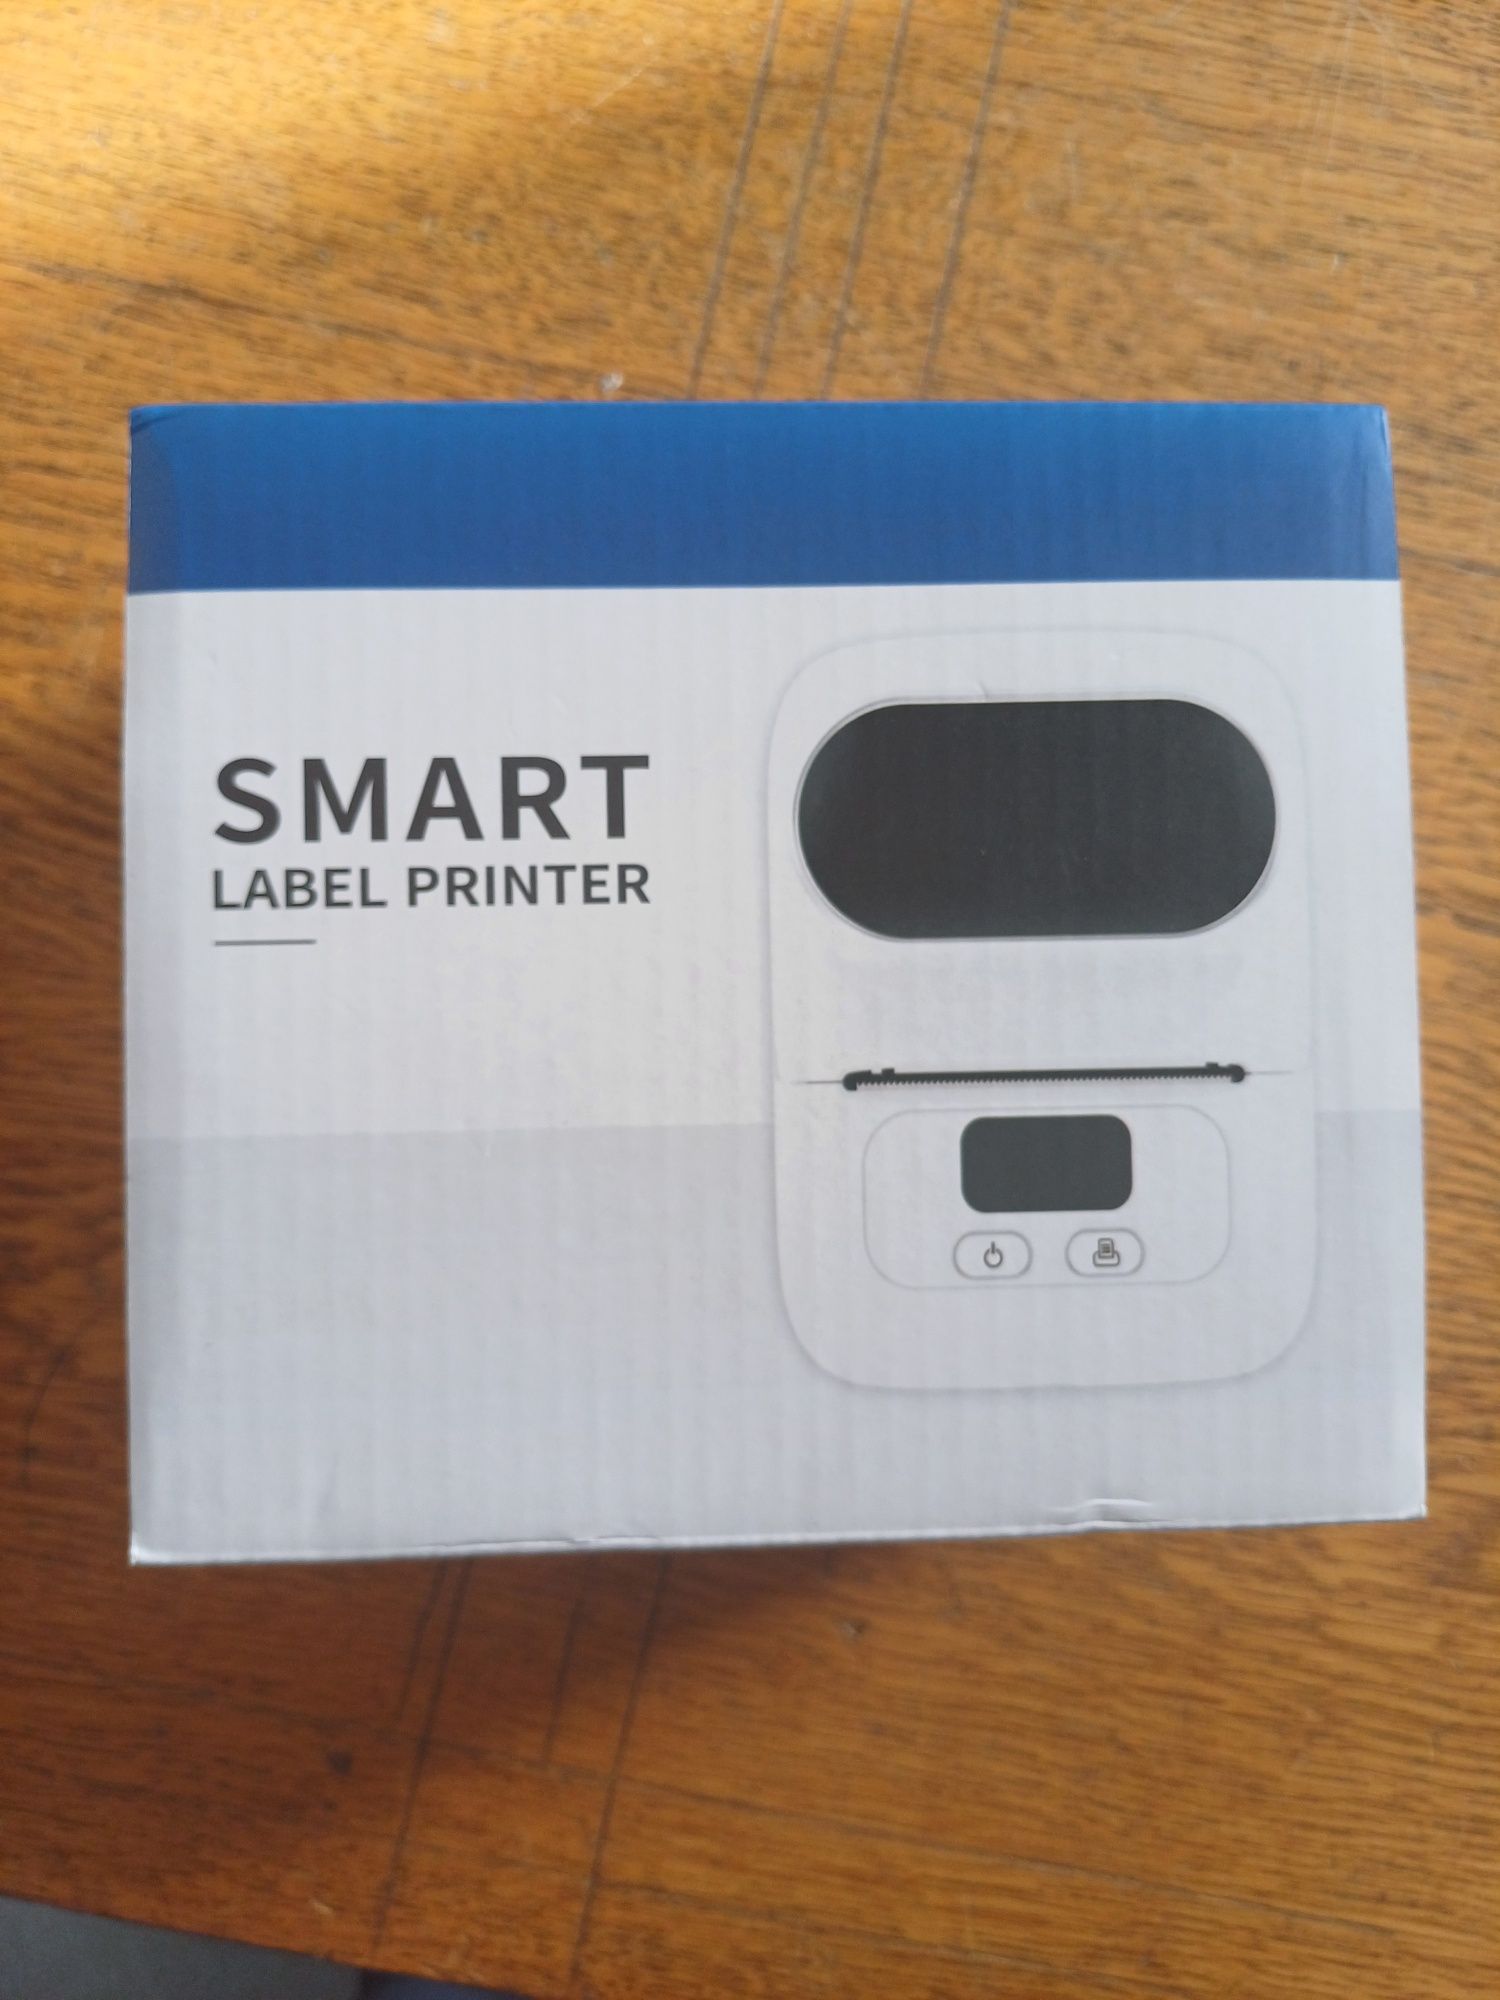 Smart label printer,imprimanta pentru etichete